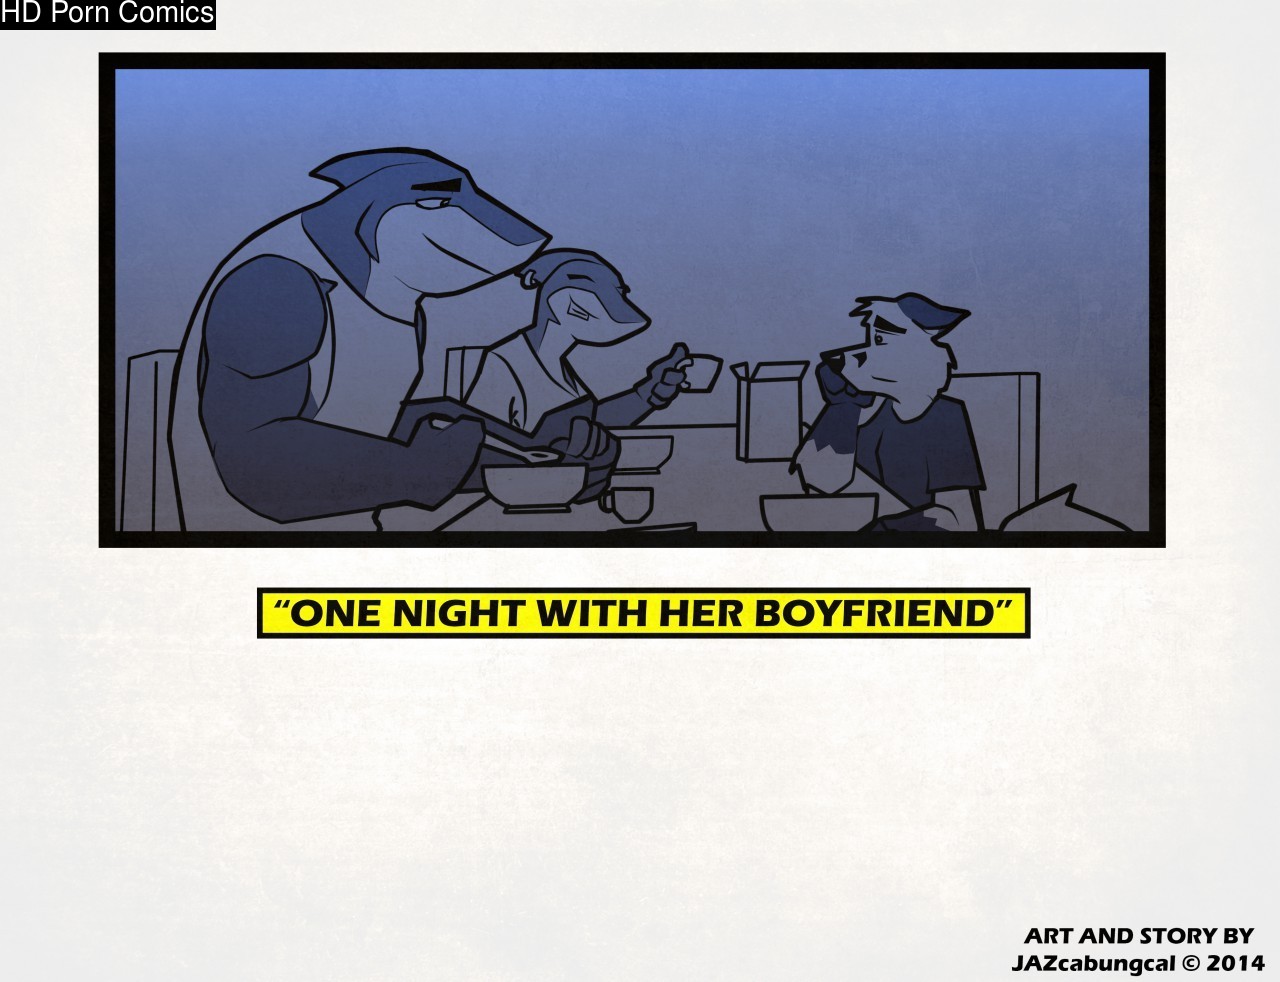 Nightes Bf Hd Com - One Night With Her Boyfriend 2 comic porn - HD Porn Comics